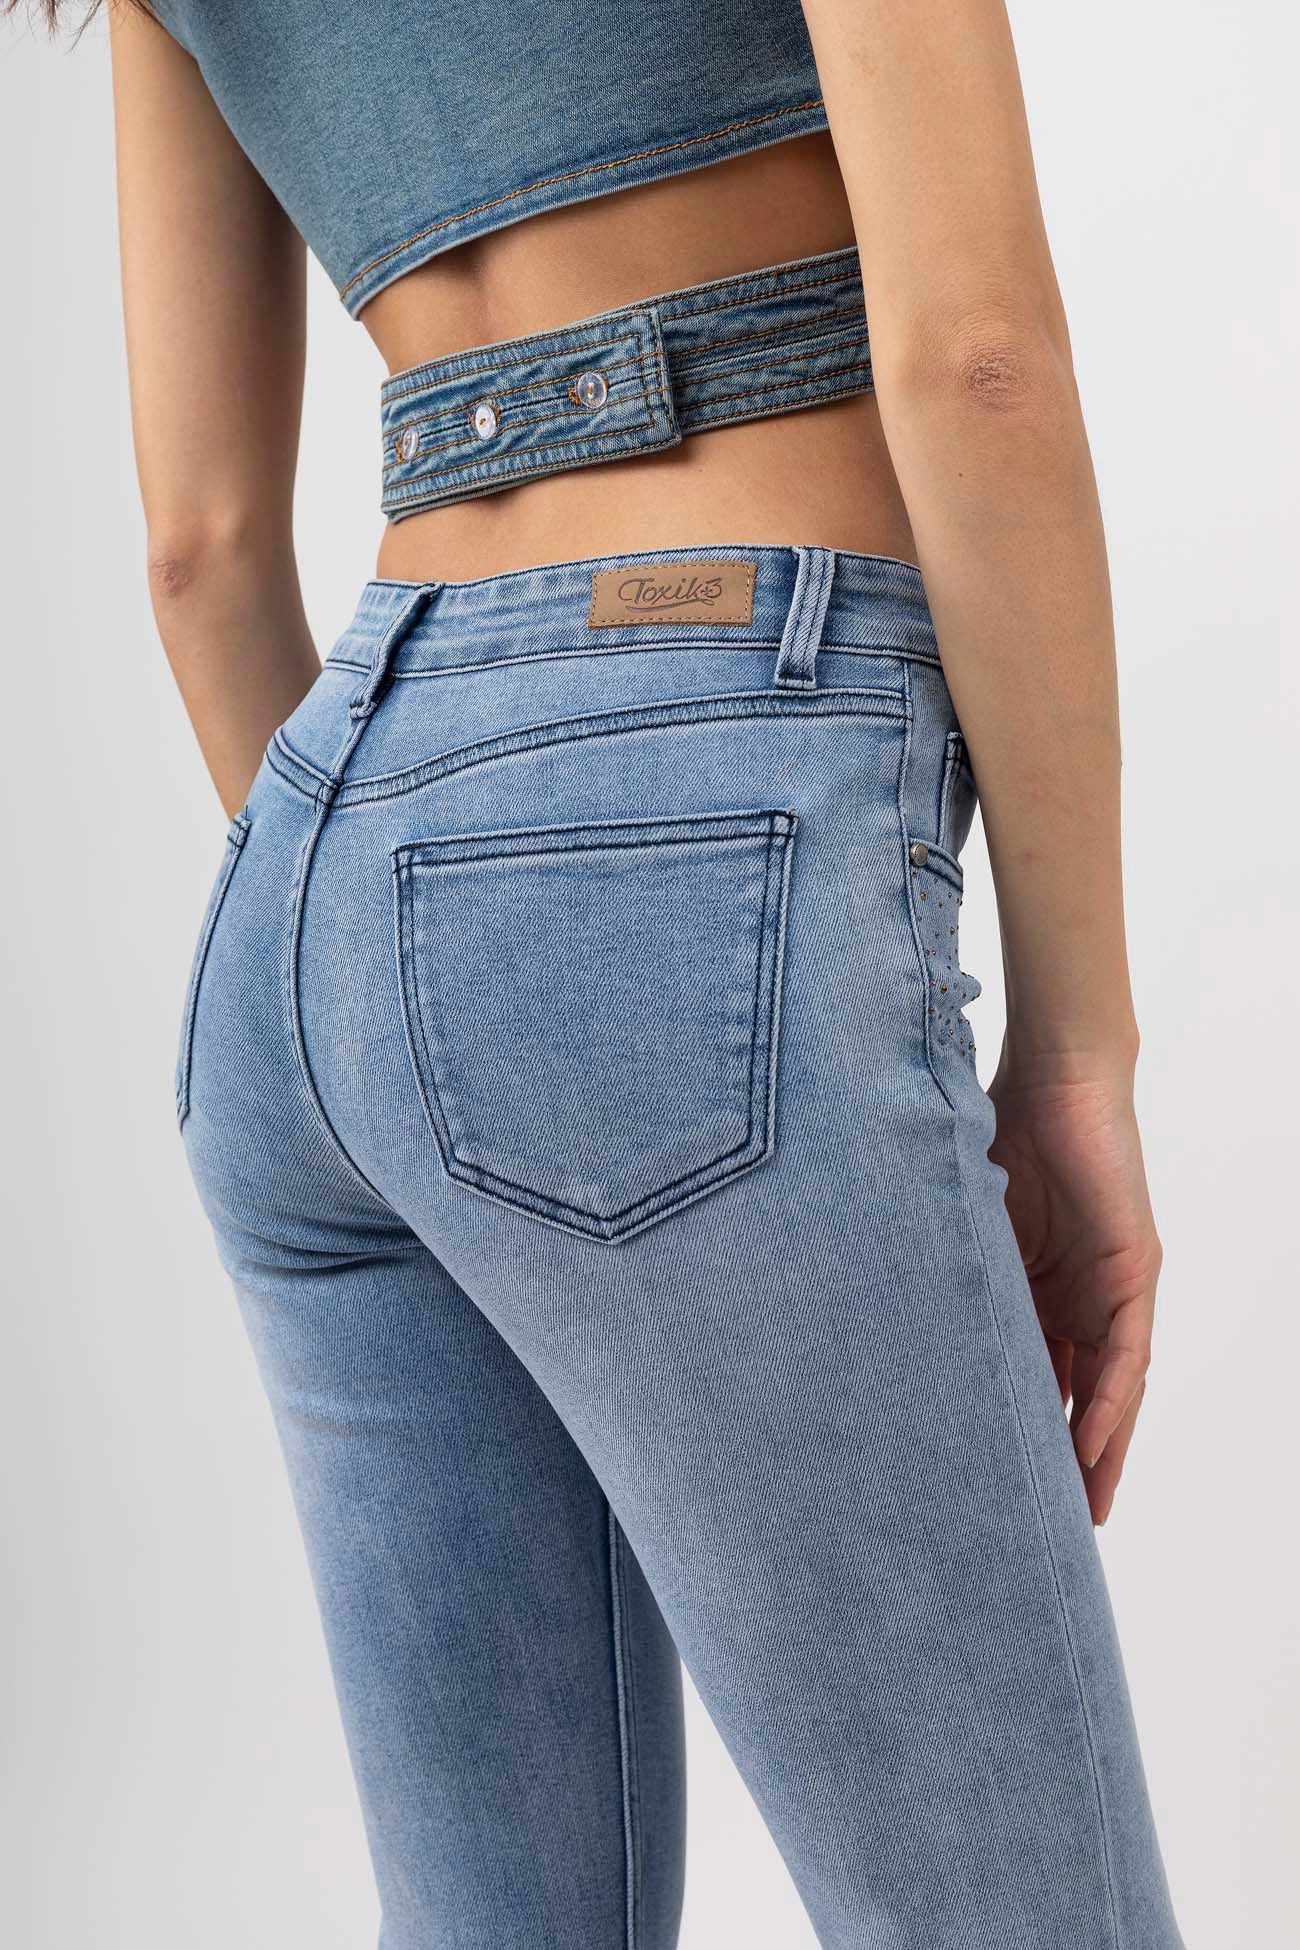 Detalles de los jeans Pockets de cristal - Oeste